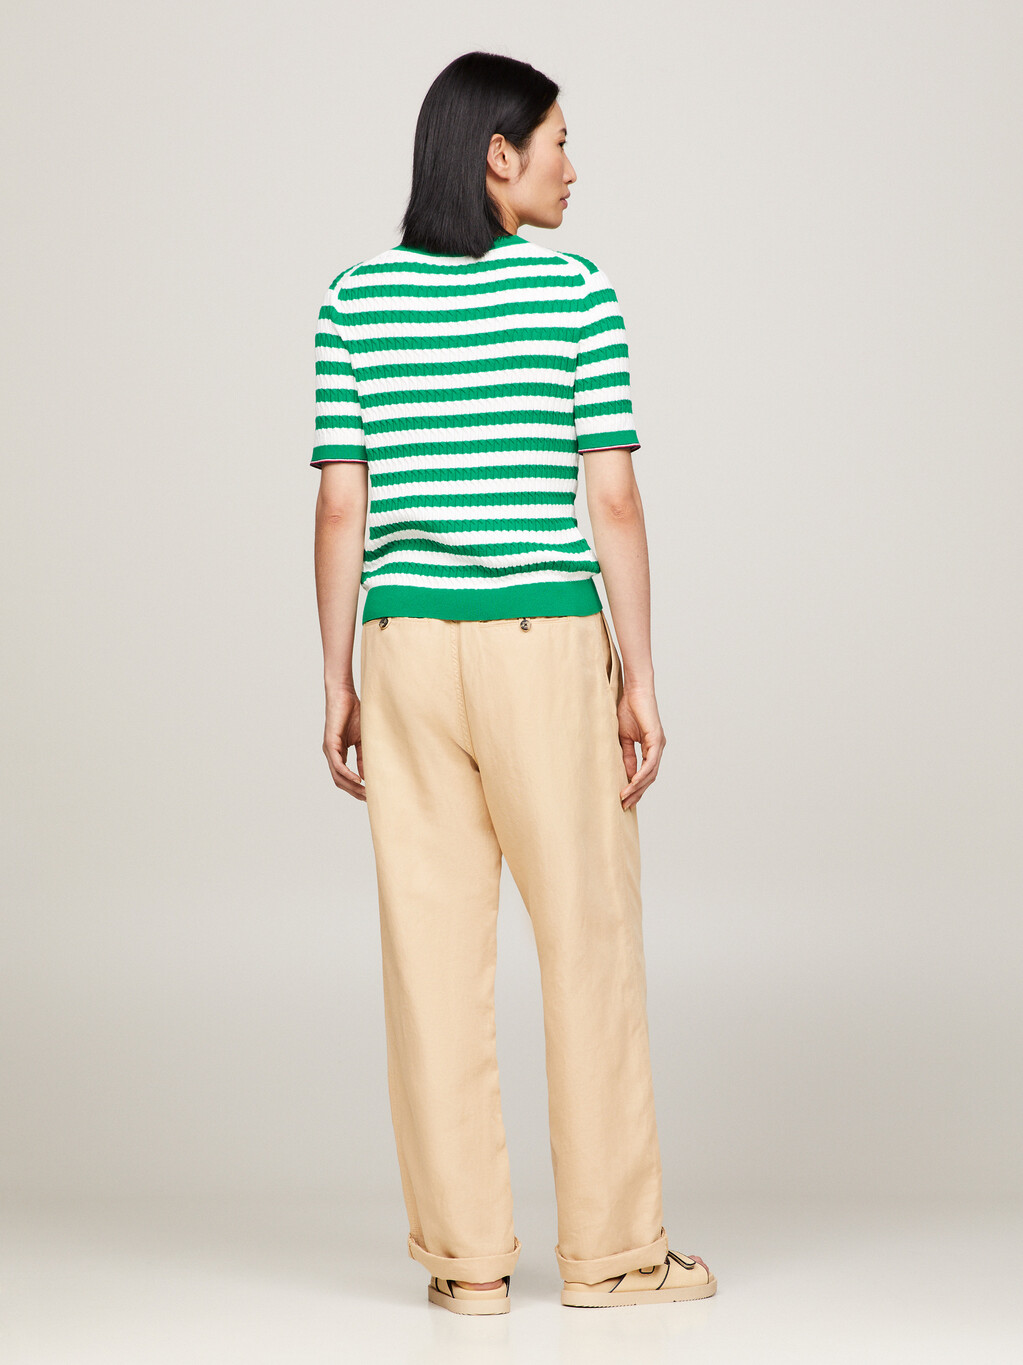 Stripe Slim Fit Short Sleeve Jumper, Breton Ecru/Olympic Green, hi-res